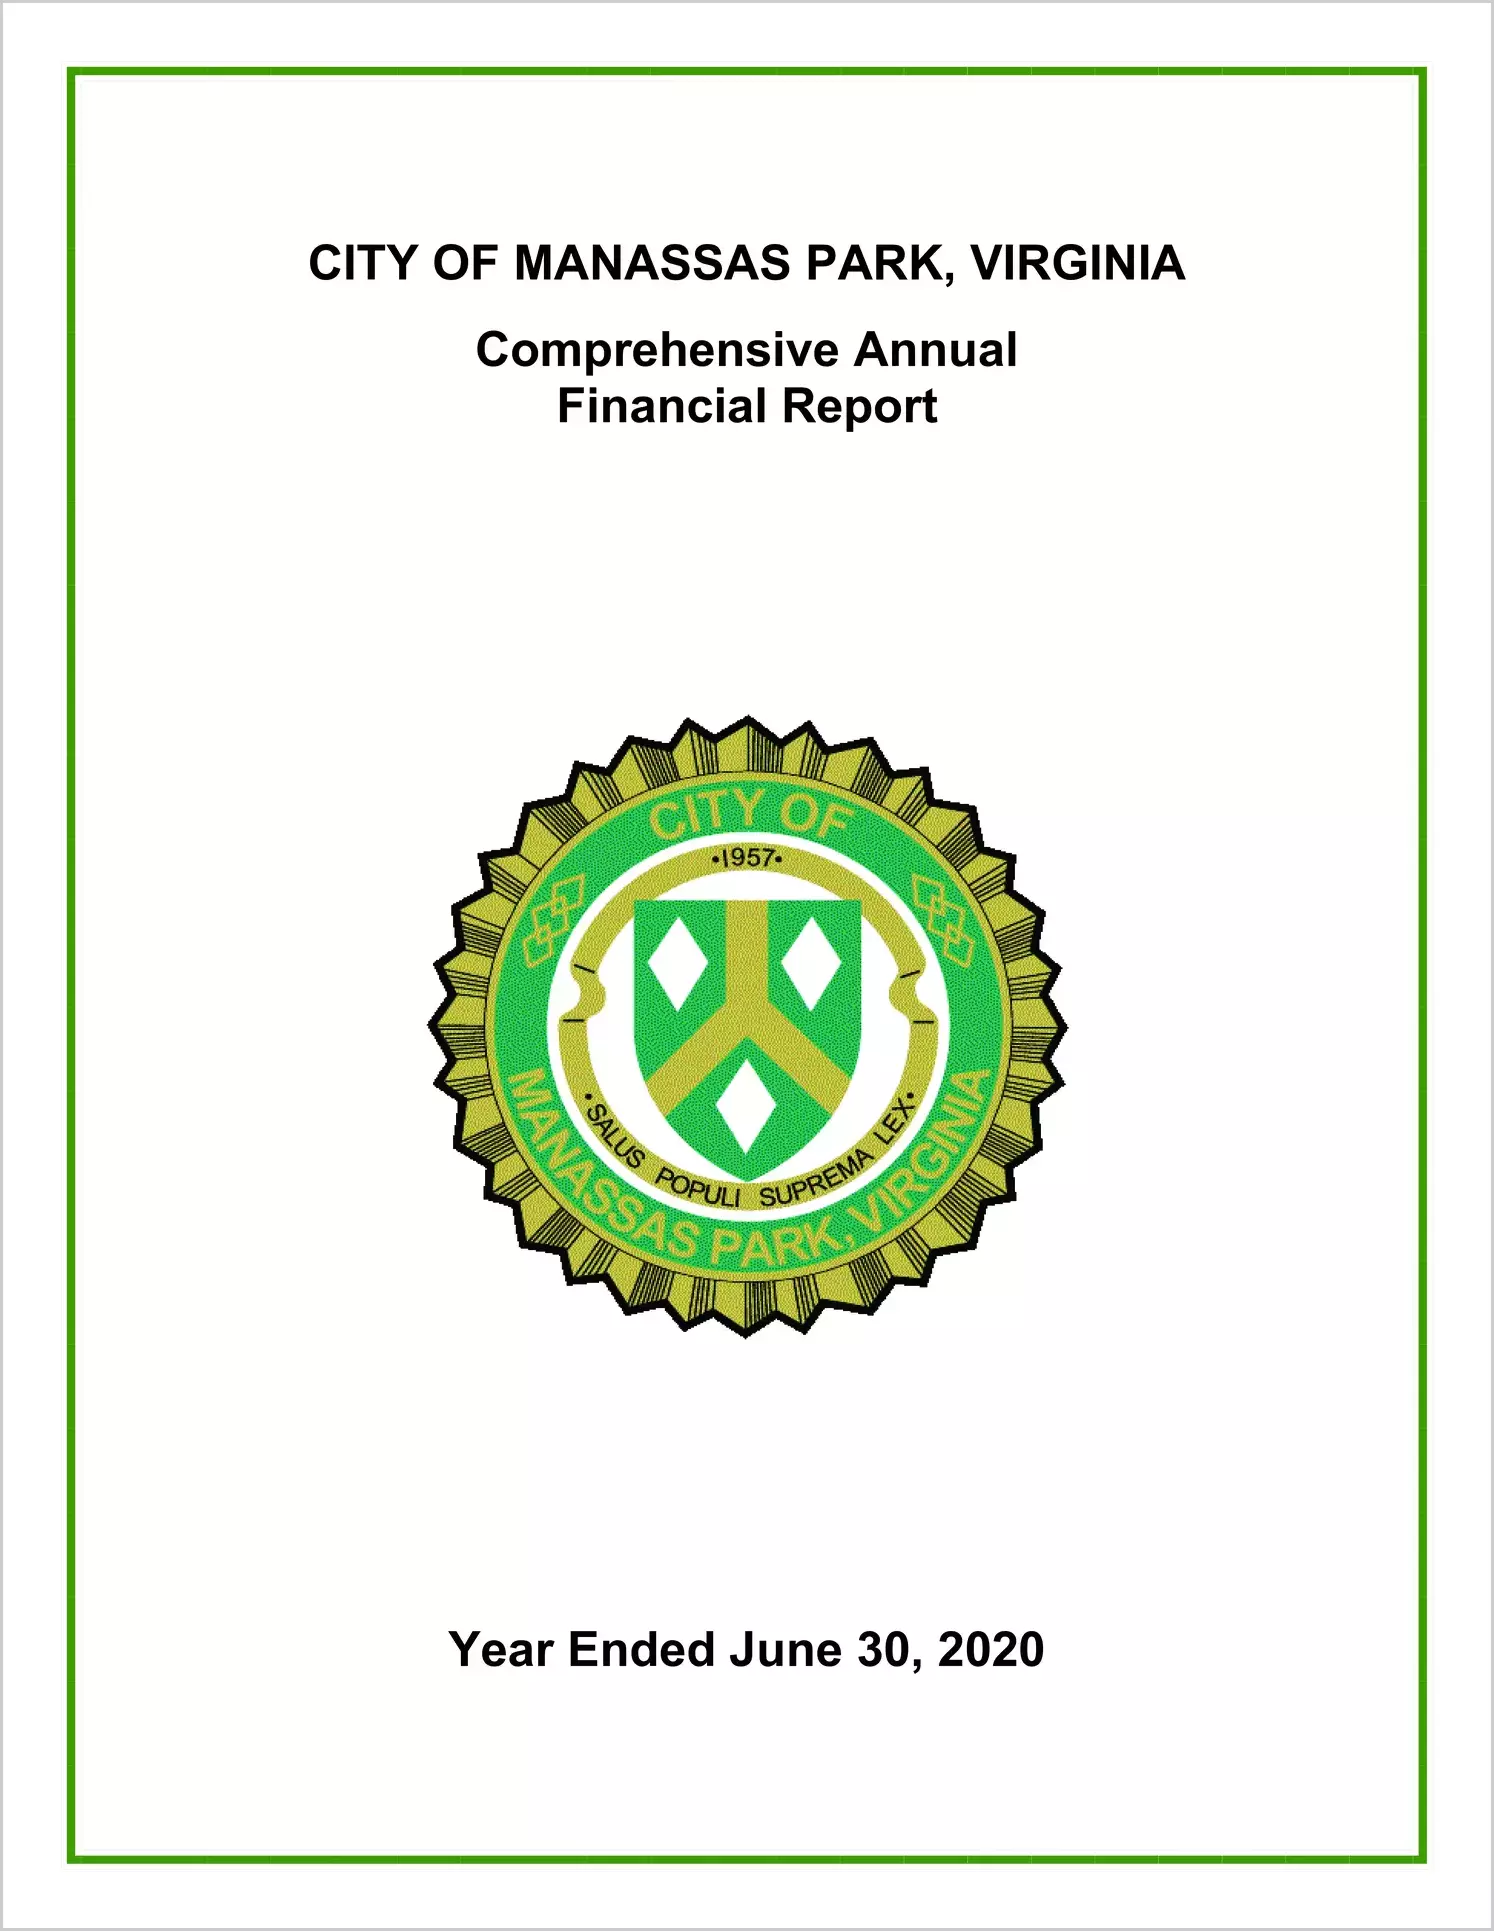 2020 Annual Financial Report for City of Manassas Park